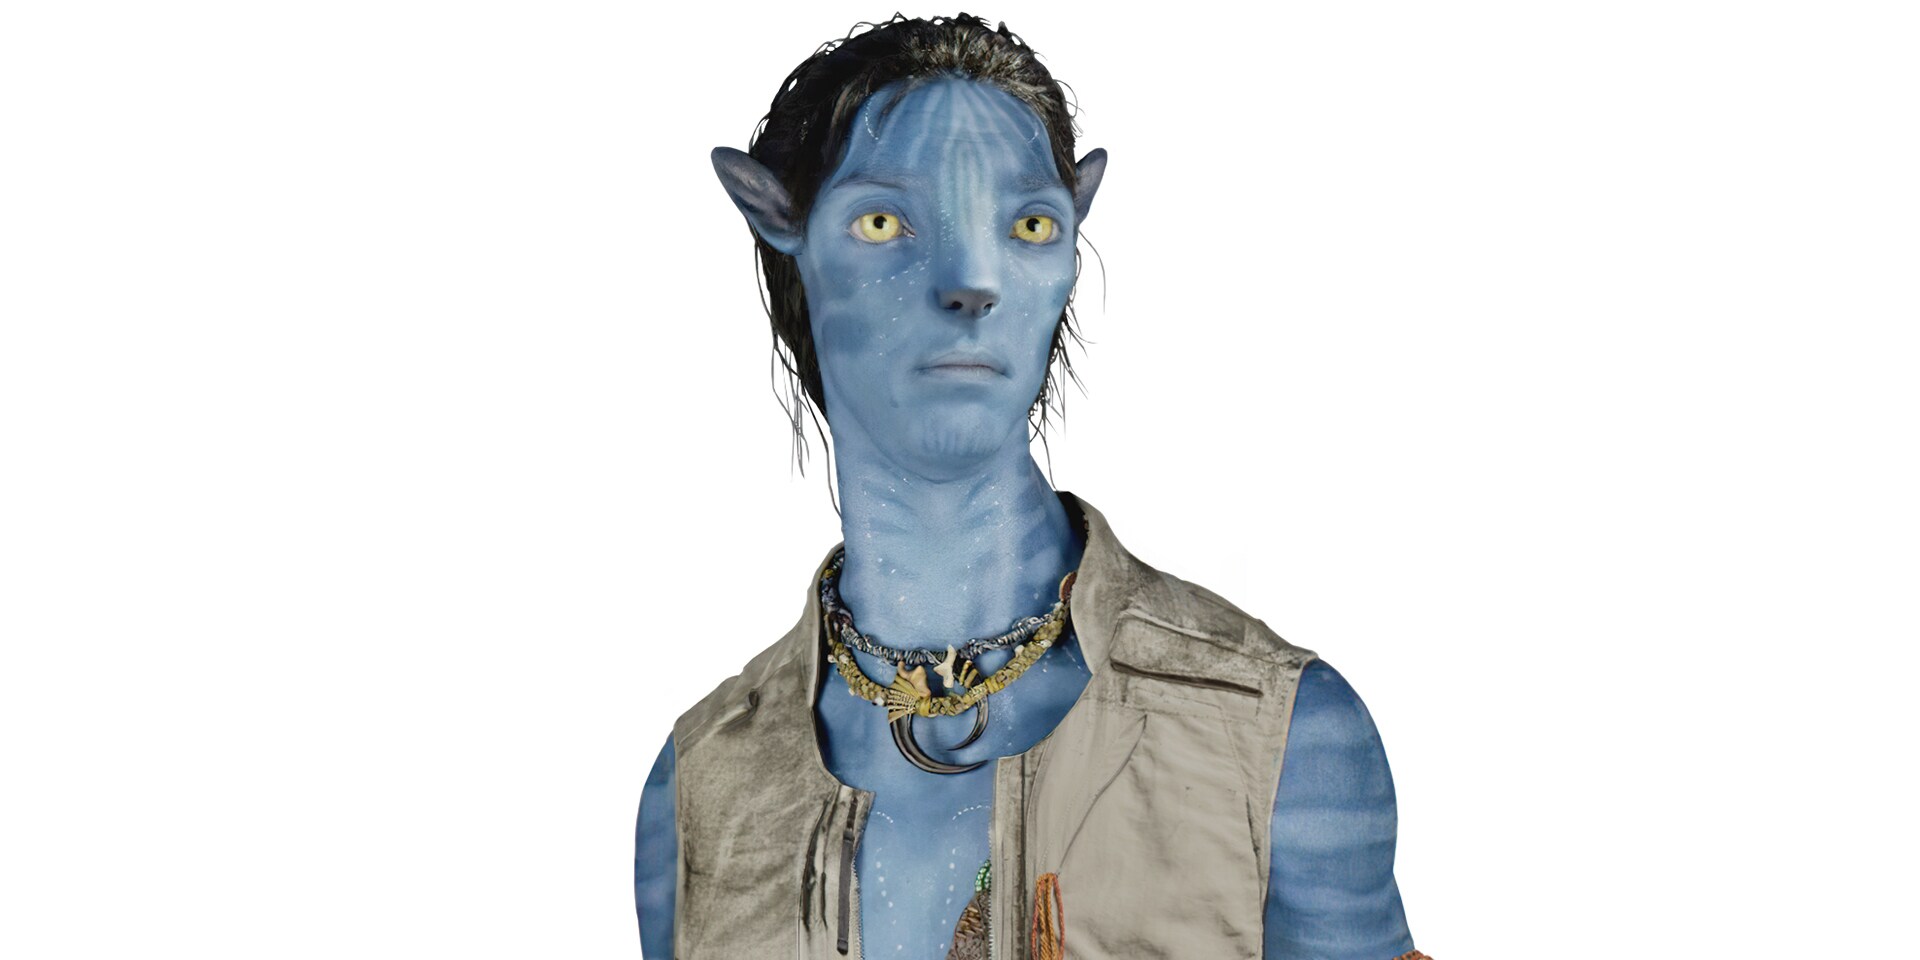 Jake Sully & his Avatar